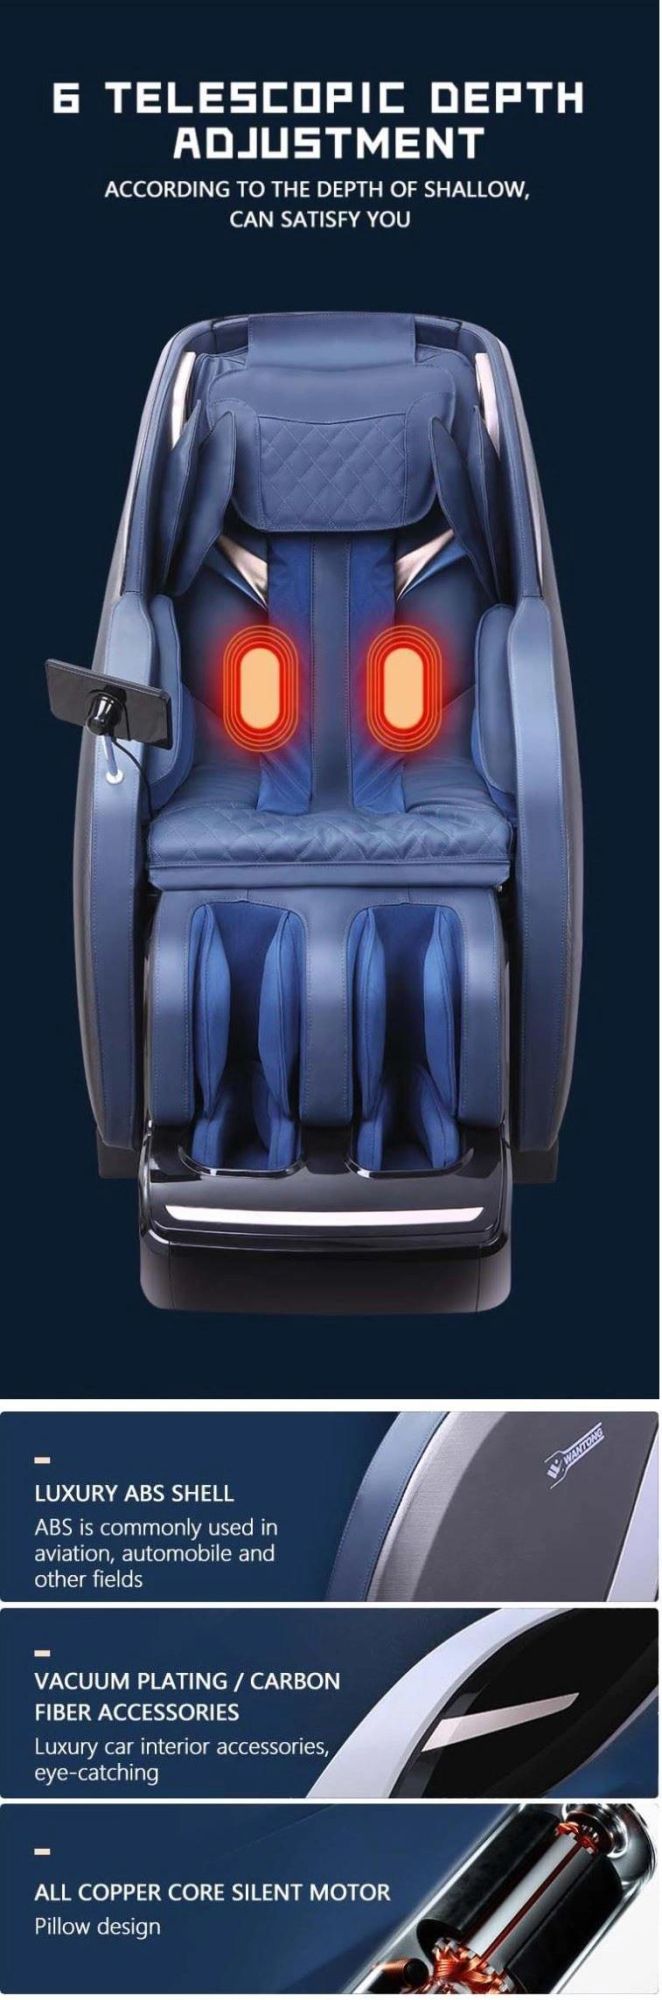 Wholesale 2021 New Design 4D Full Body Zero Gravity Shiatsu Adjustable Electric Massage Chair